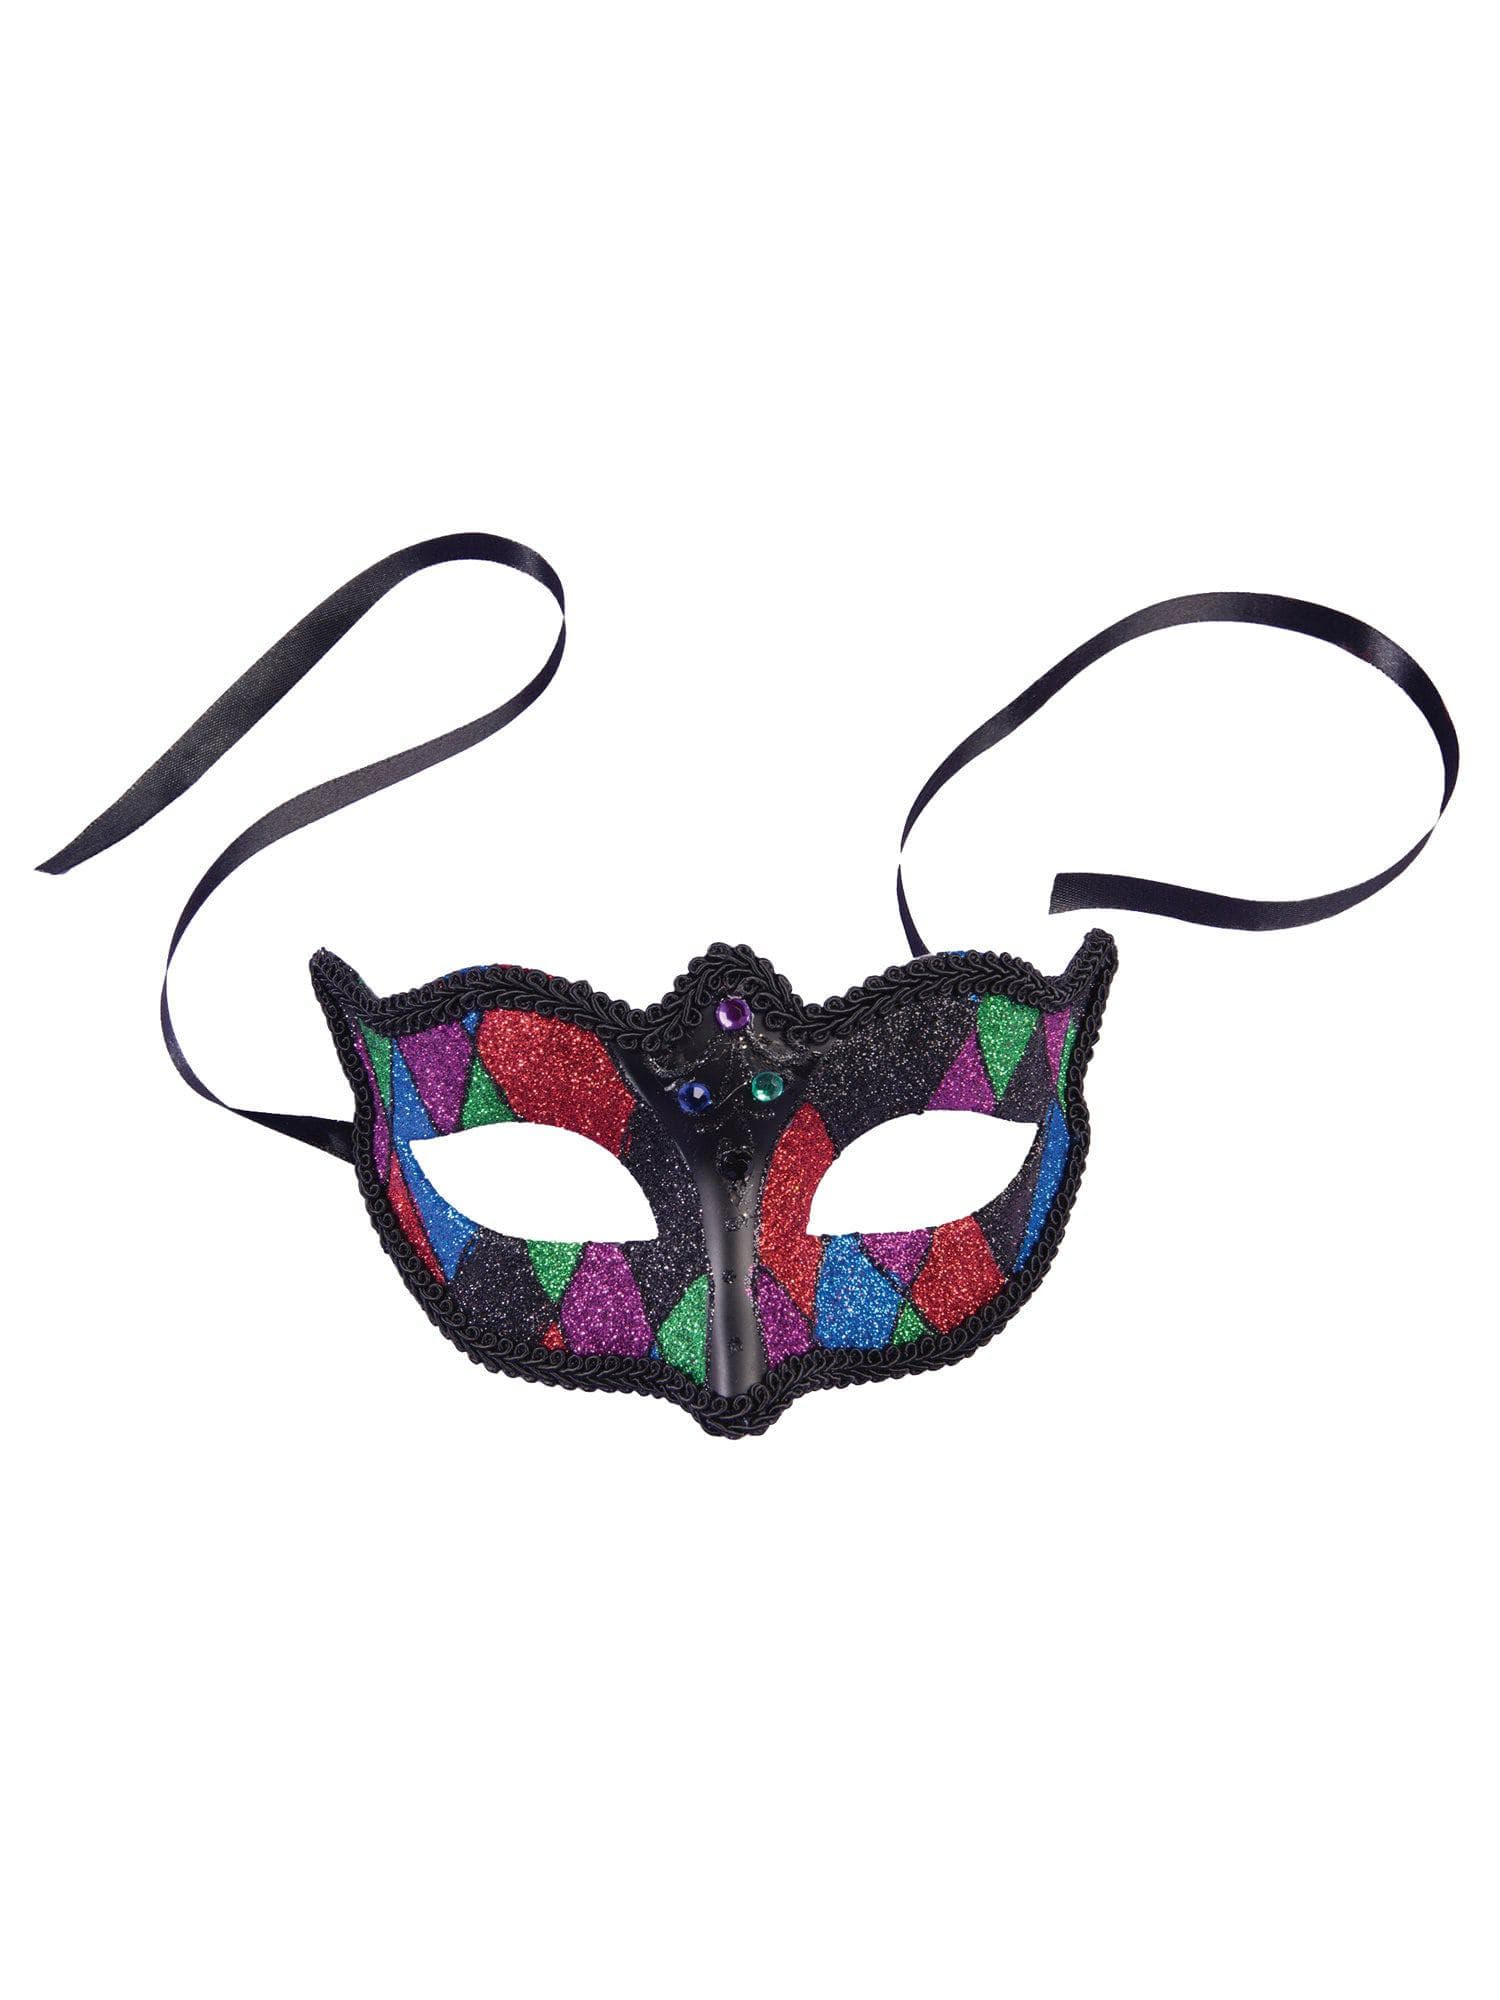 Carnival Ribbon Eye Mask - costumes.com